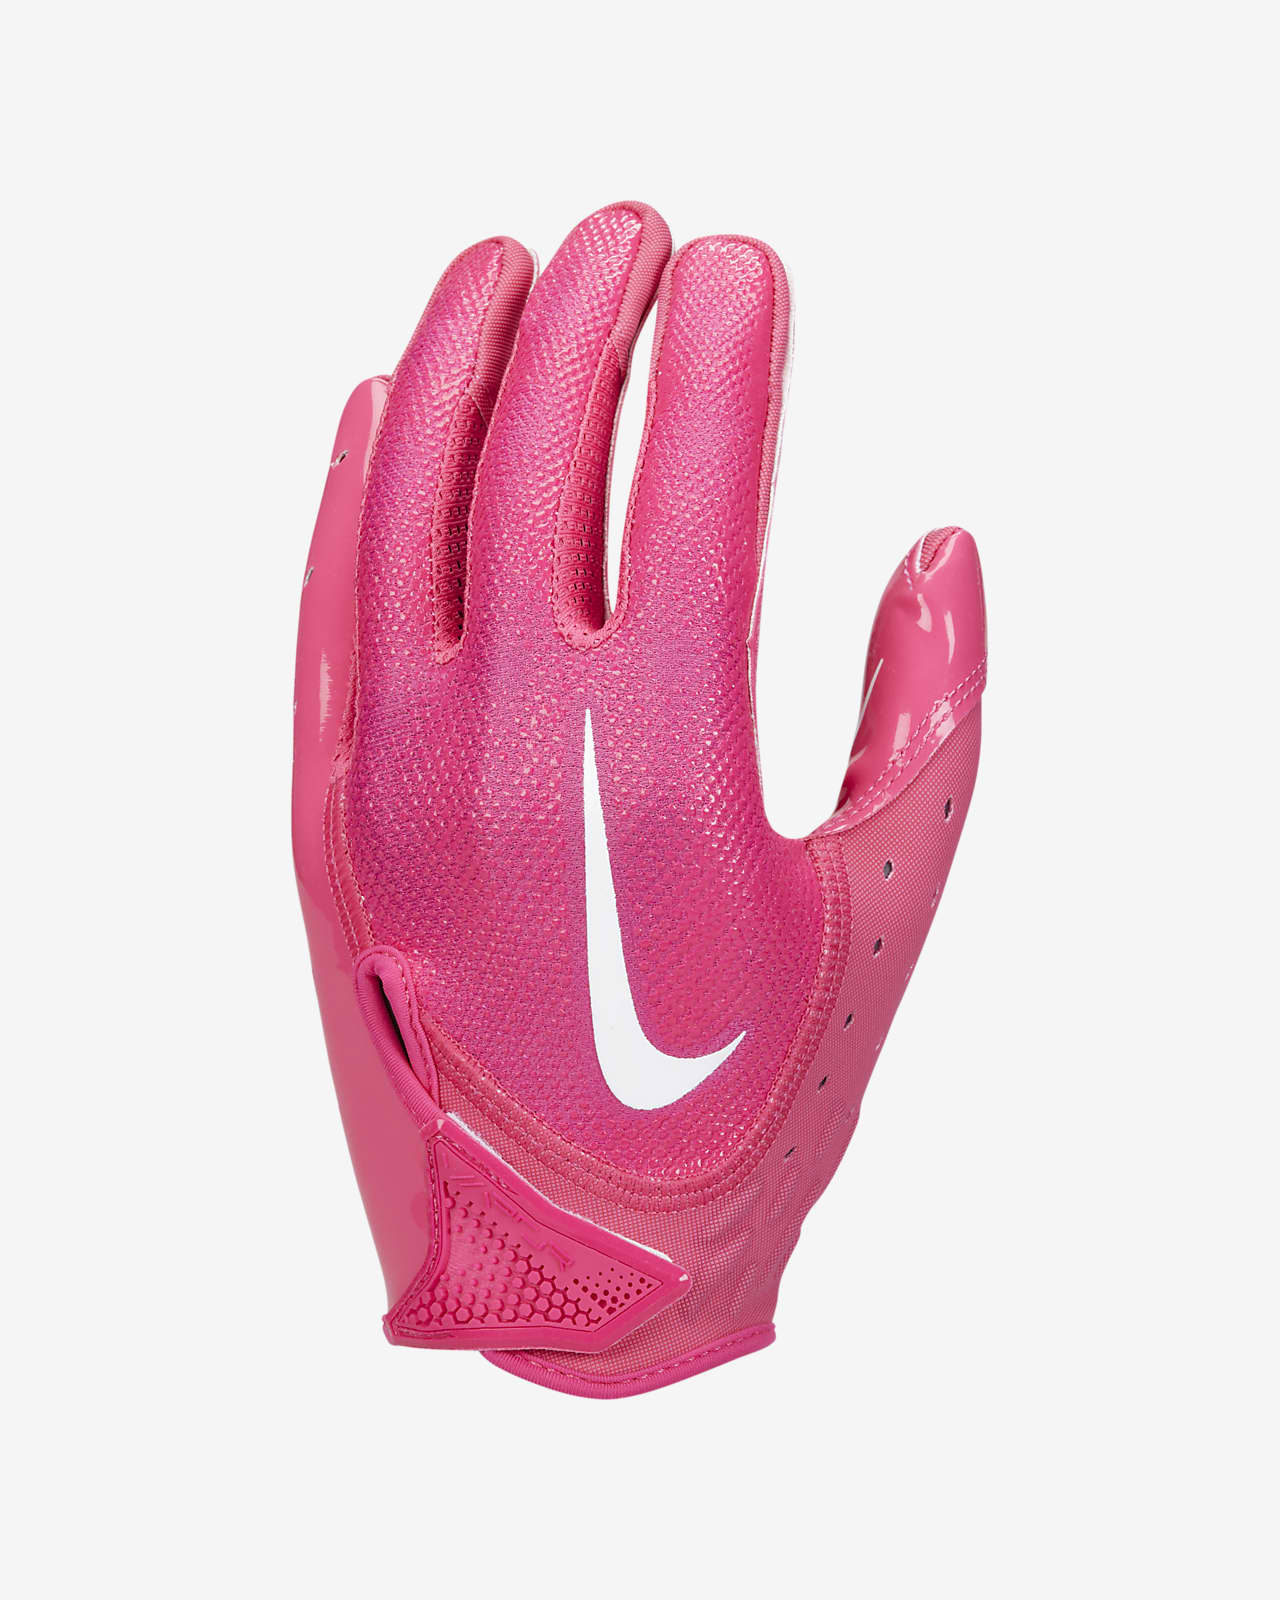 Nike Vapor Jet Football Gloves Pair). Nike.com